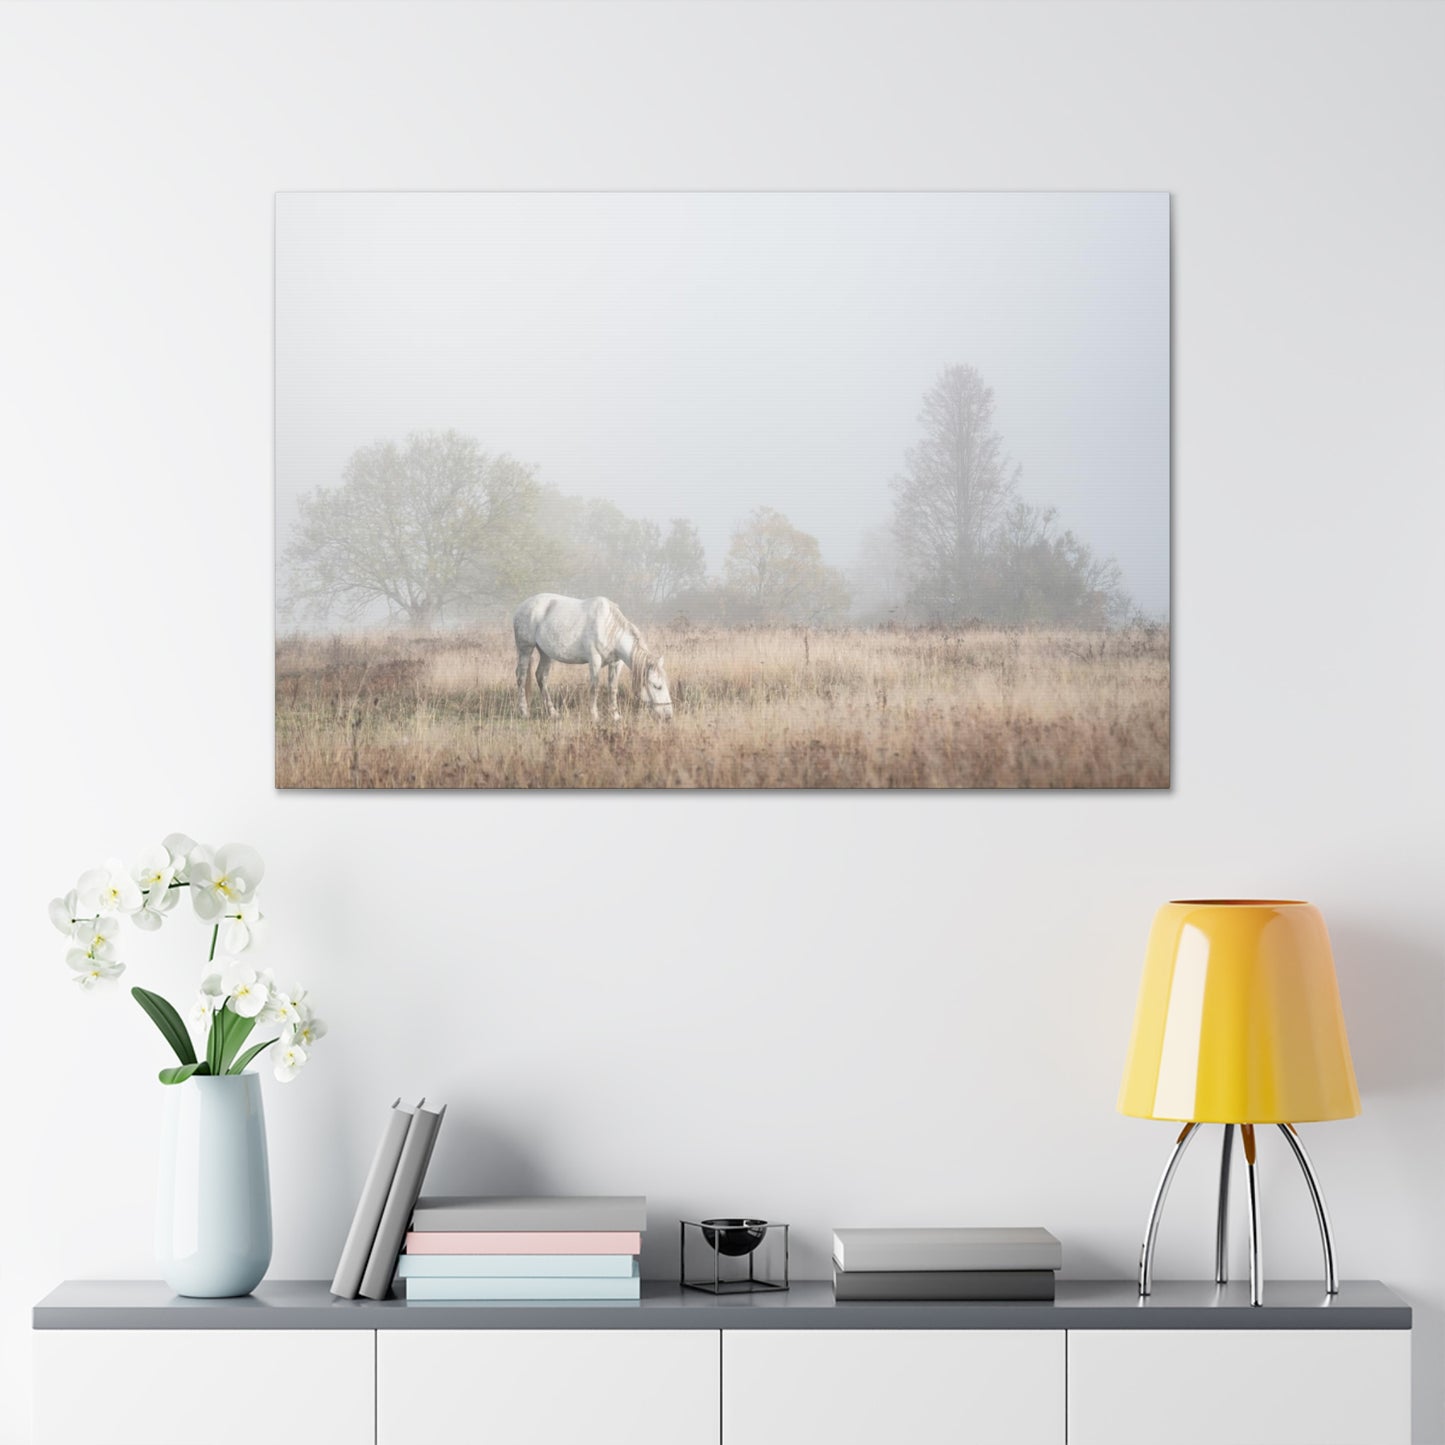 White Horse Foggy Meadow - Canvas